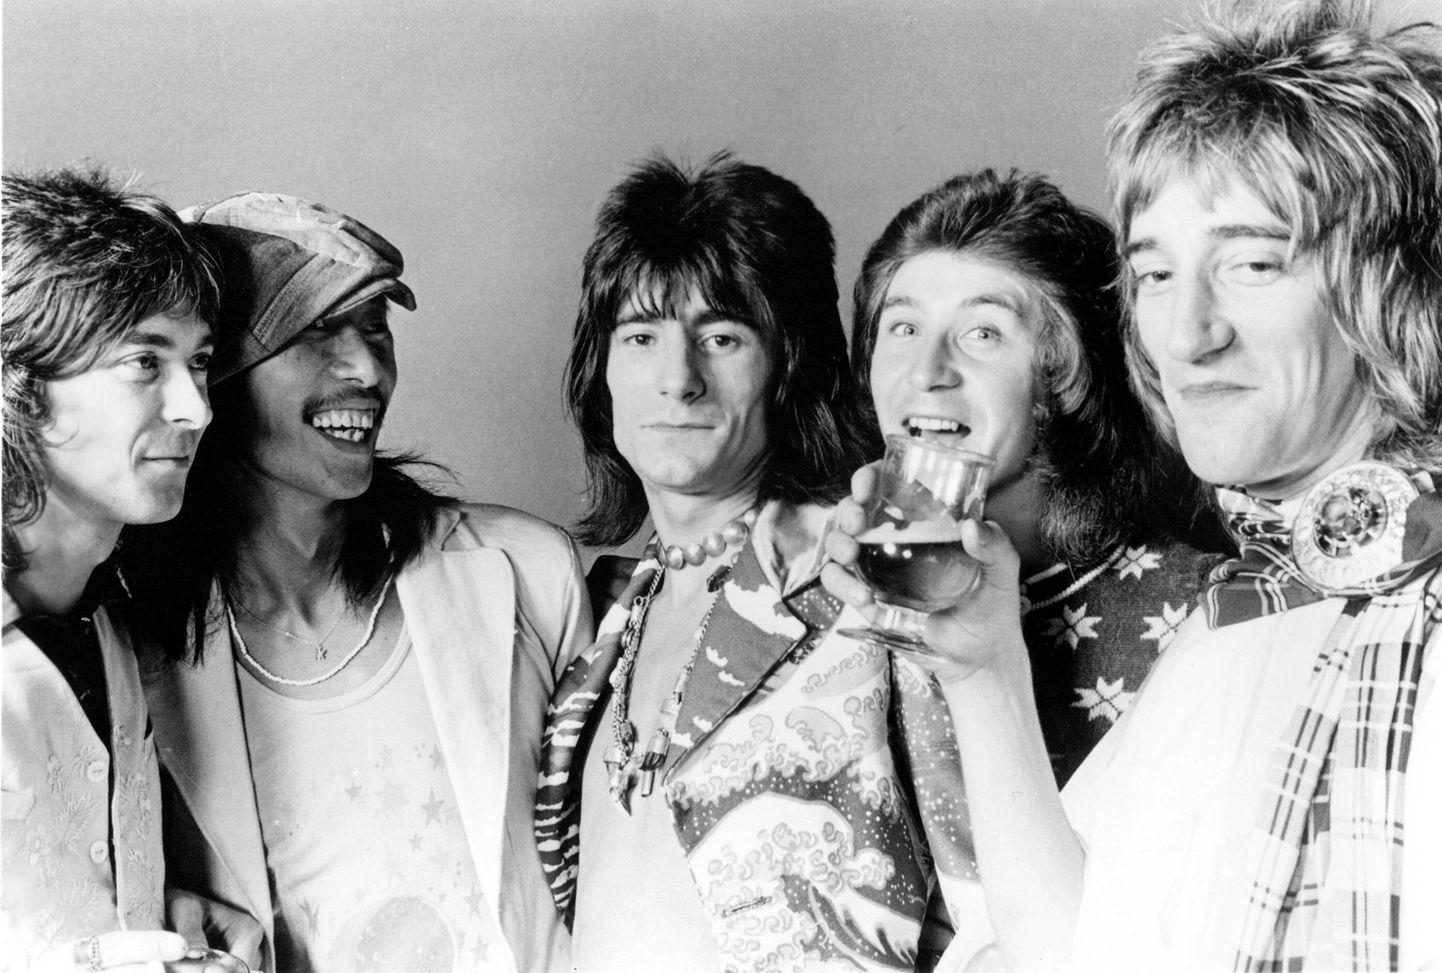 Ansambel The Faces aastal 1974: Ian McLagan, Tetsu Yamauchi, Ronnie Wood, Kenney Jones ja Rod Stewart.